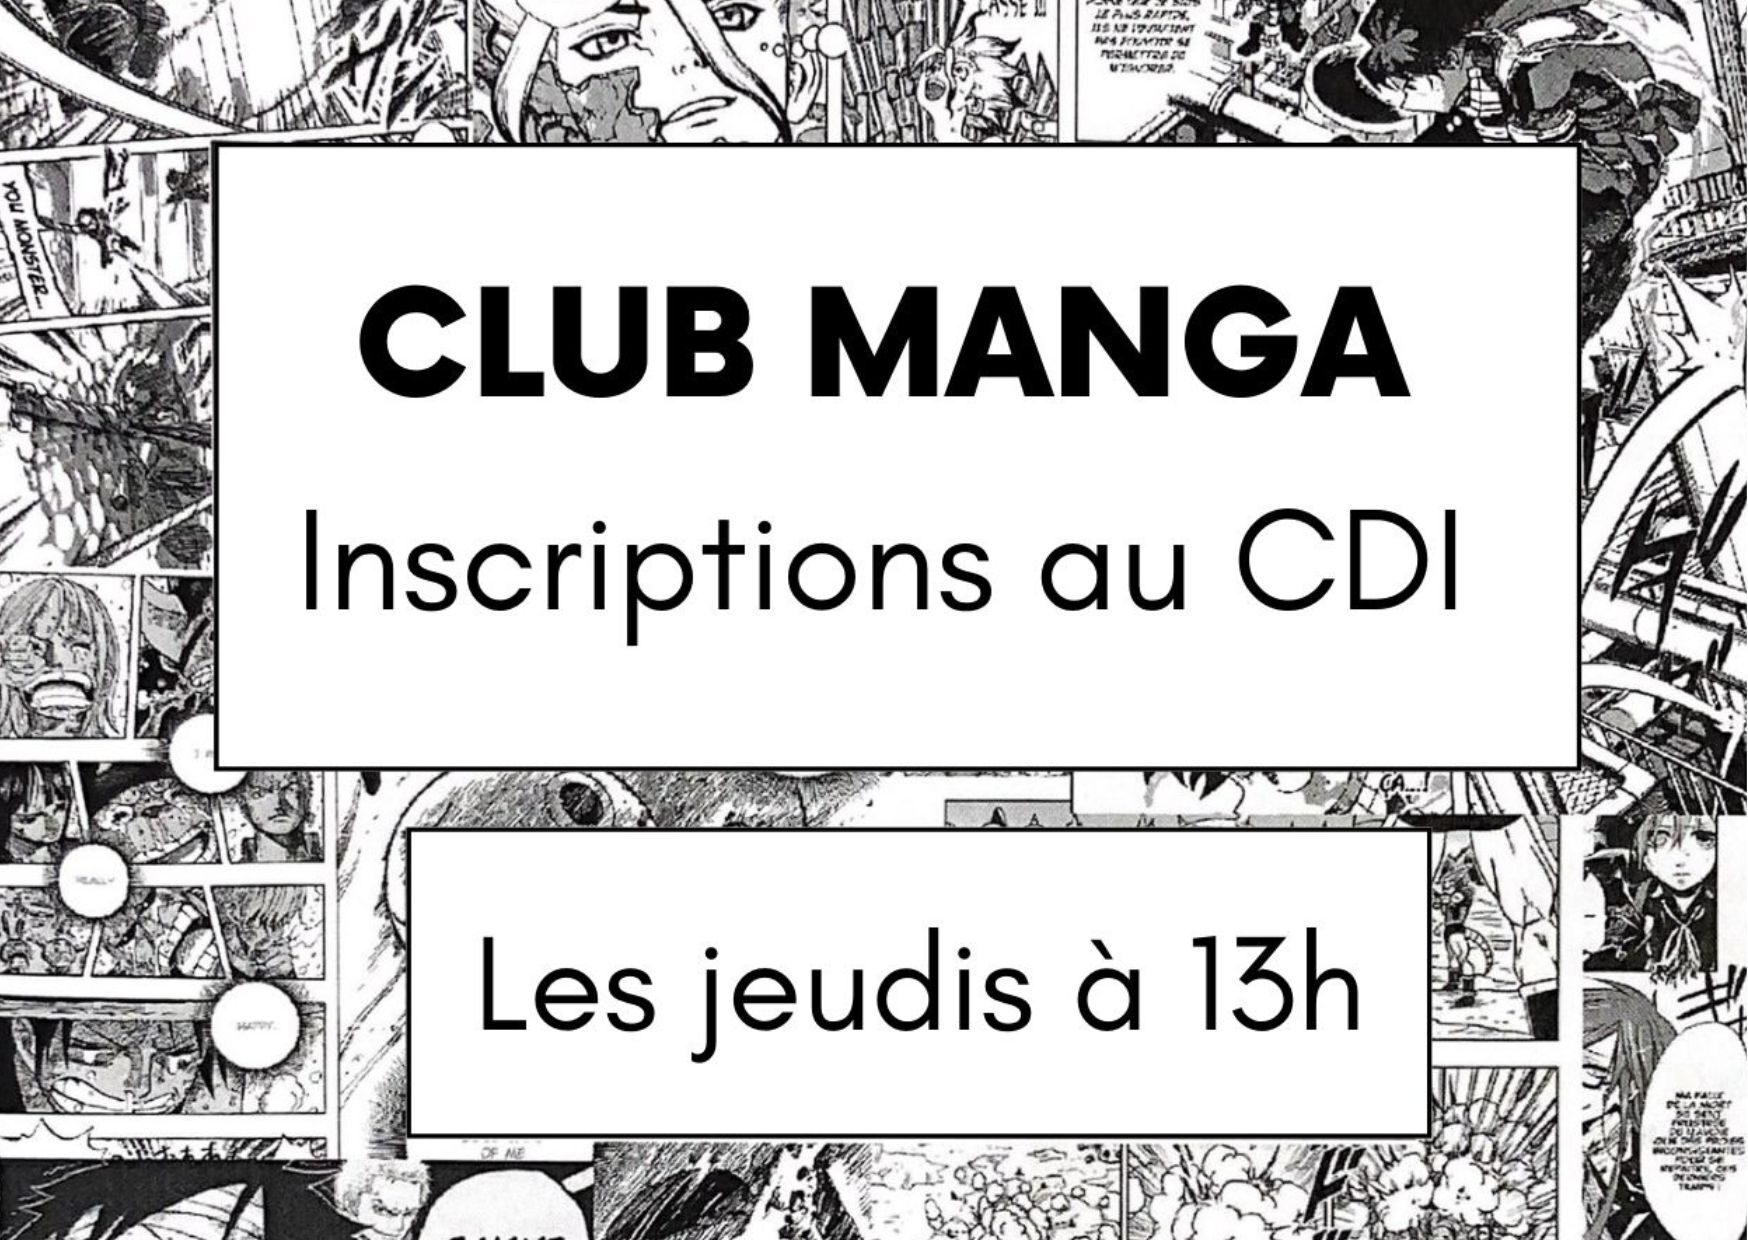 Club manga : inscriptions au CDI. Tous les jeudis à 13h.